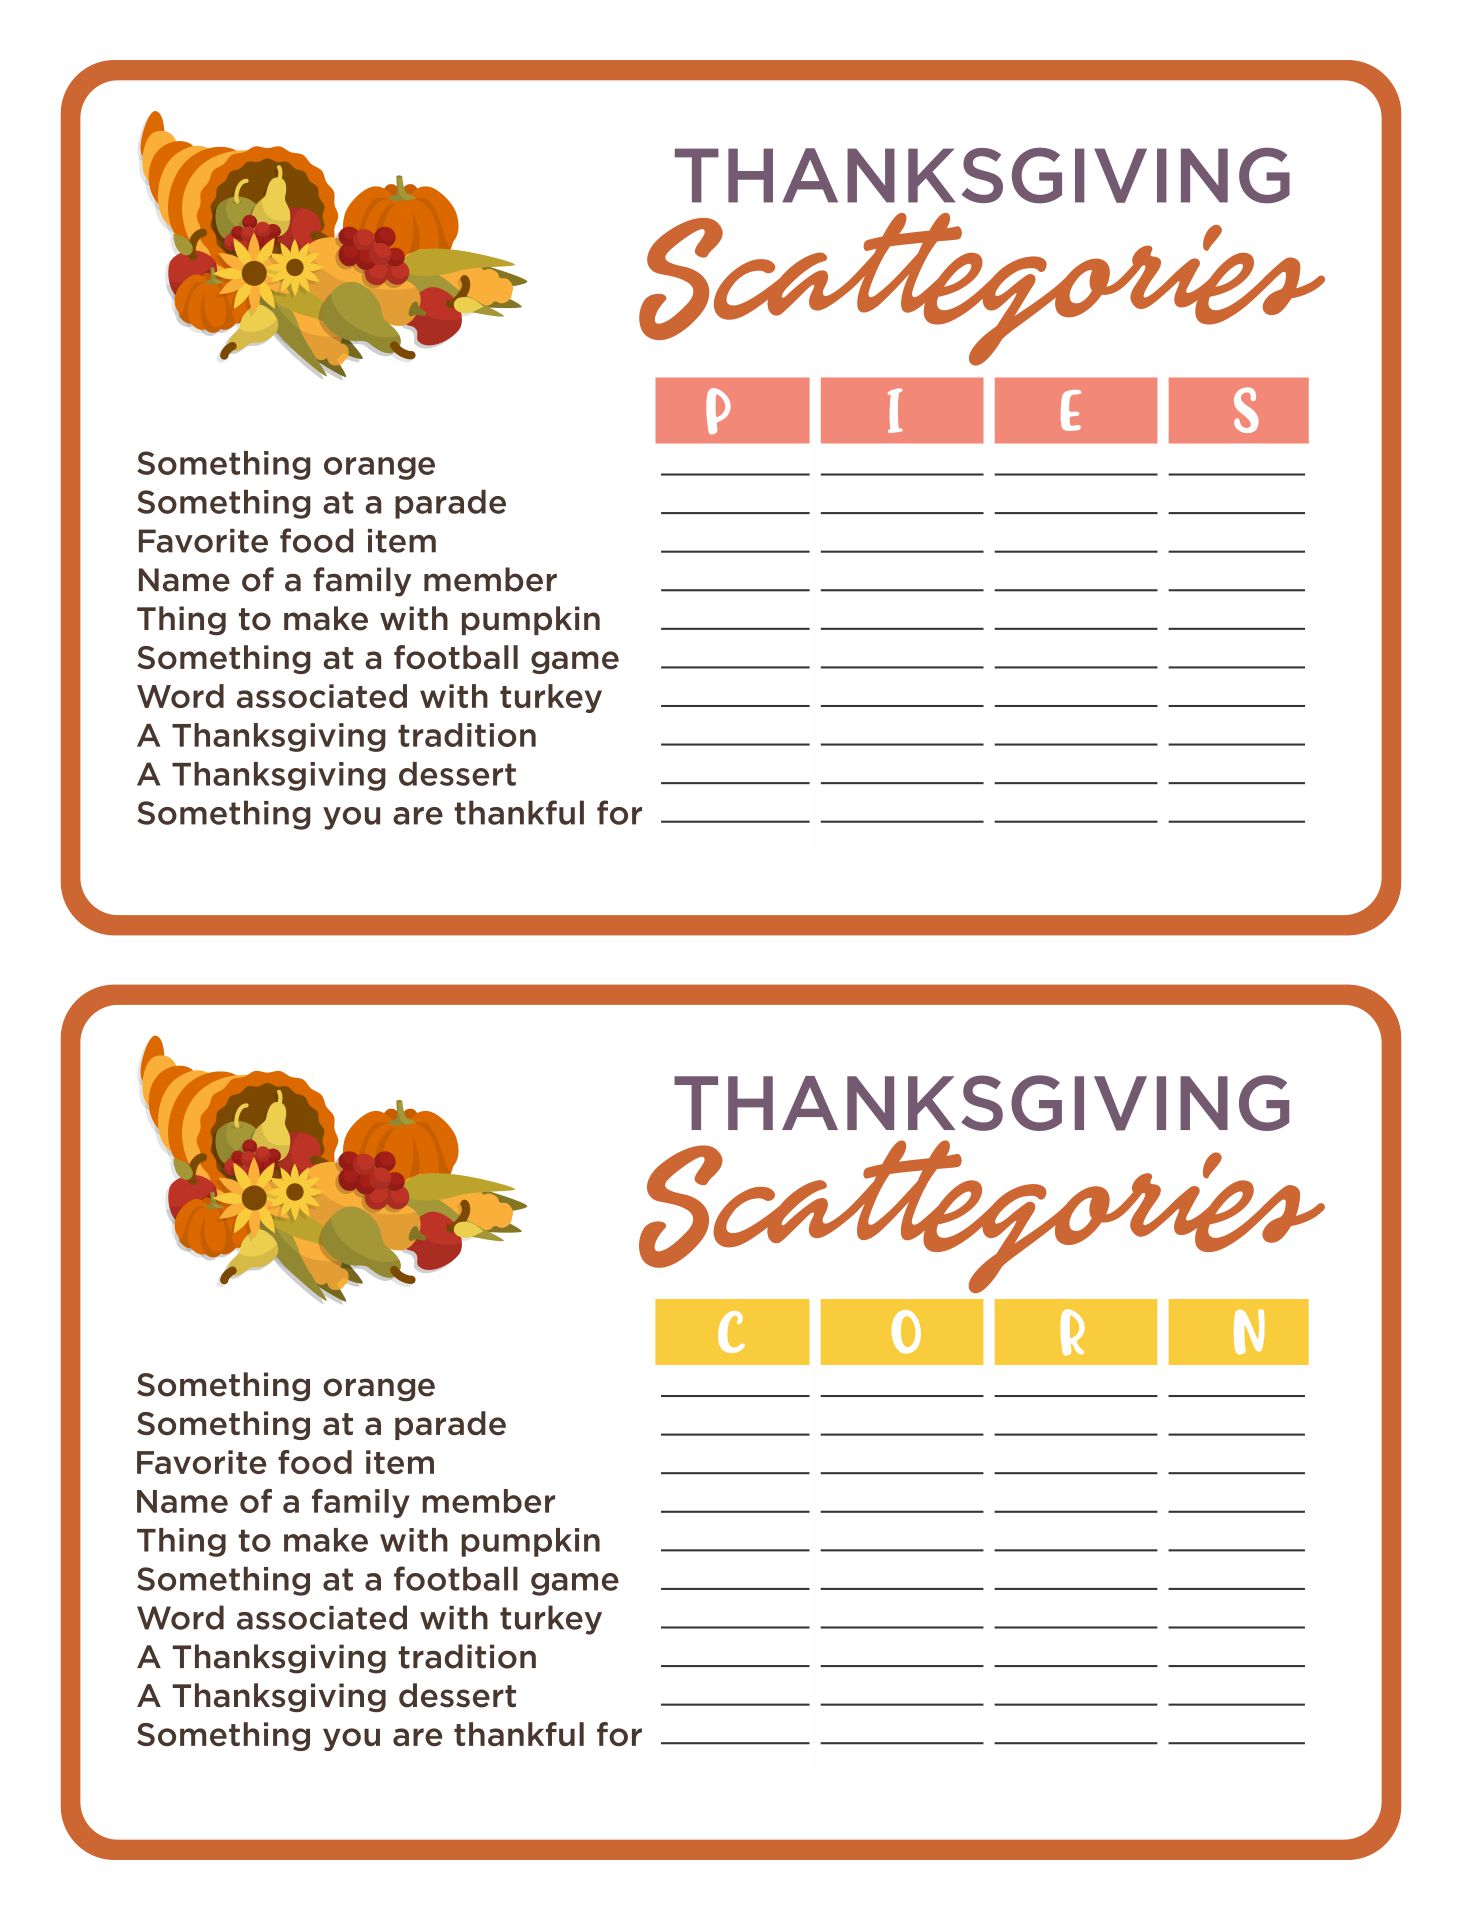 Thanksgiving Scattergories Printable Game